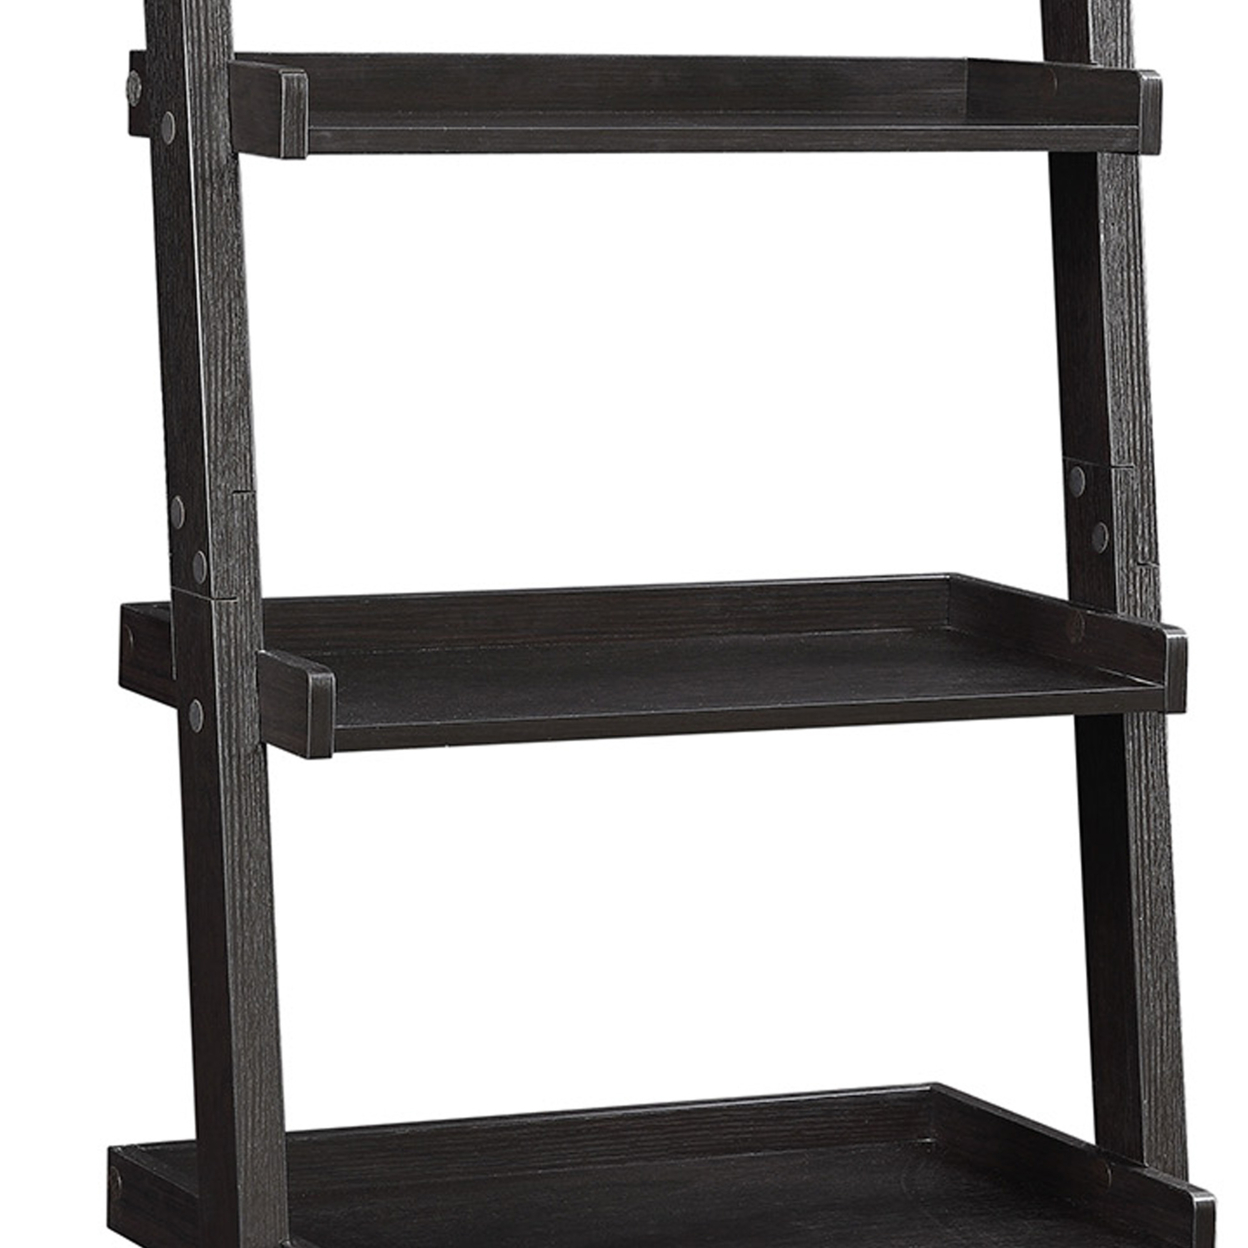 Sleek Wooden Ladder Bookcase With 5 Shelves, Brown- Saltoro Sherpi